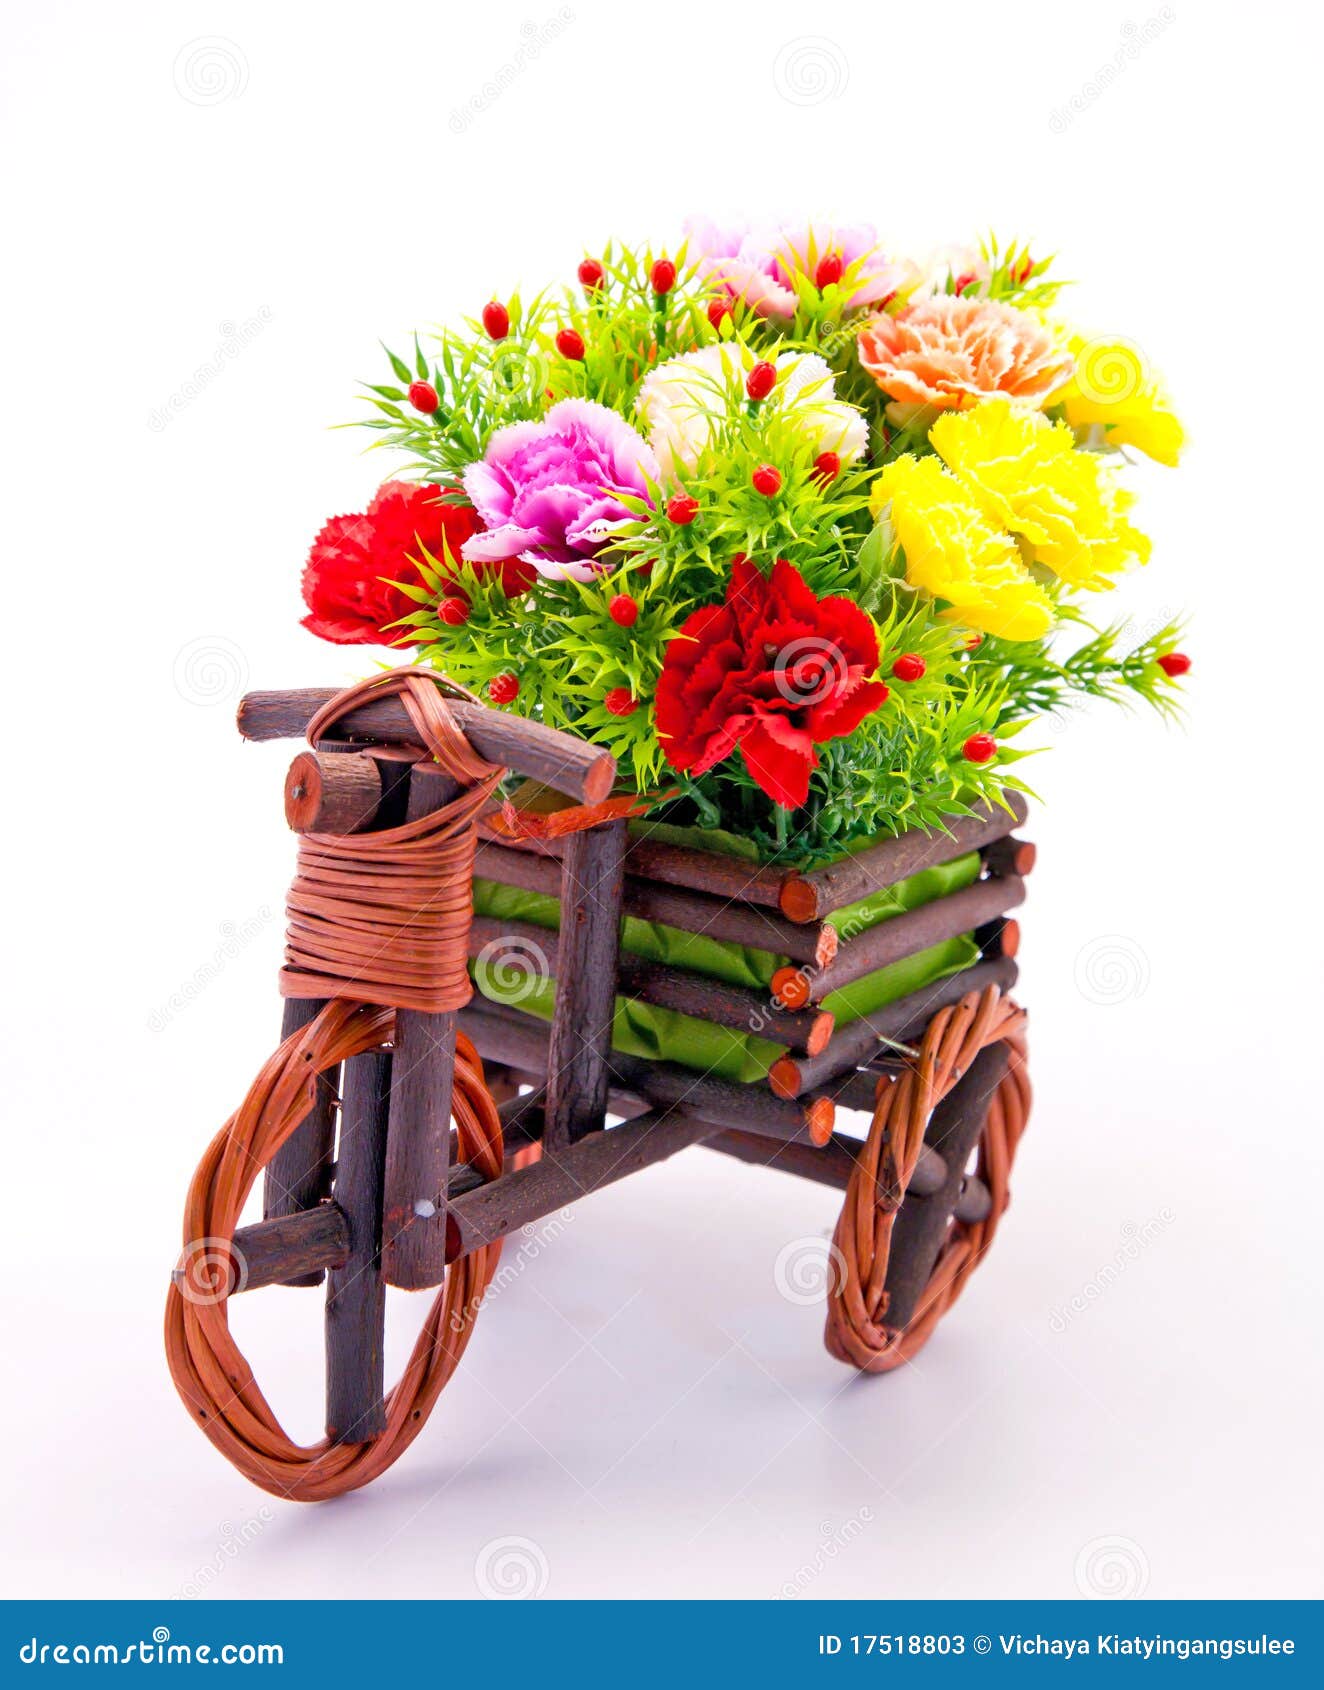 flower bouquet wooden basket 17518803